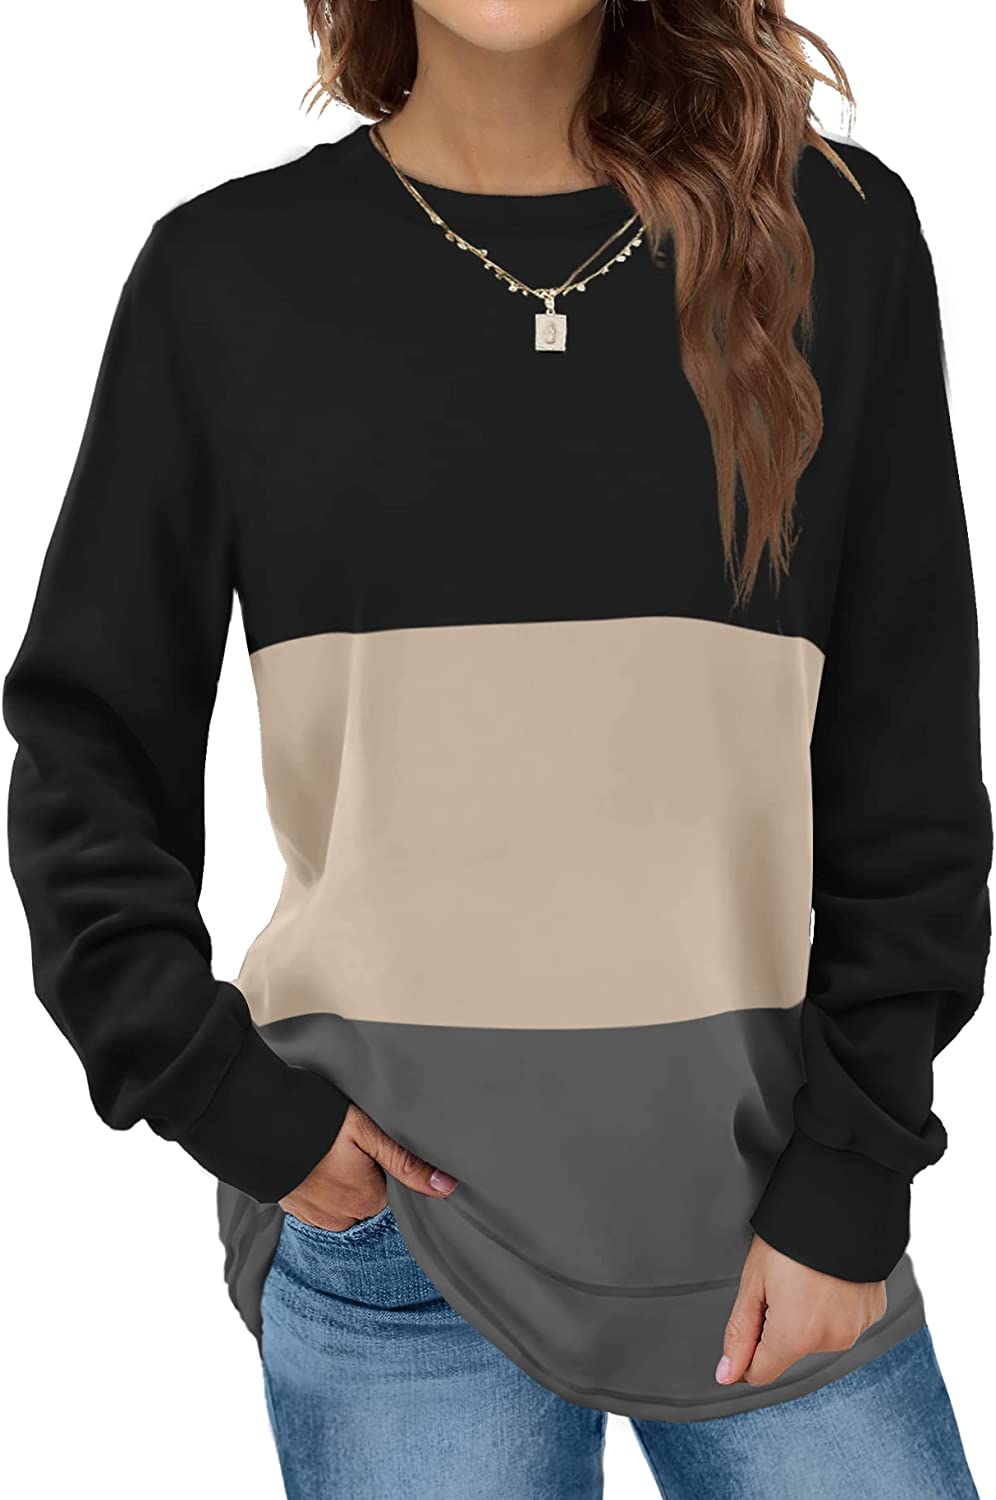 Dofaoo Sweatshirts for Women Crewneck Long Sleeve Shirts Tunic